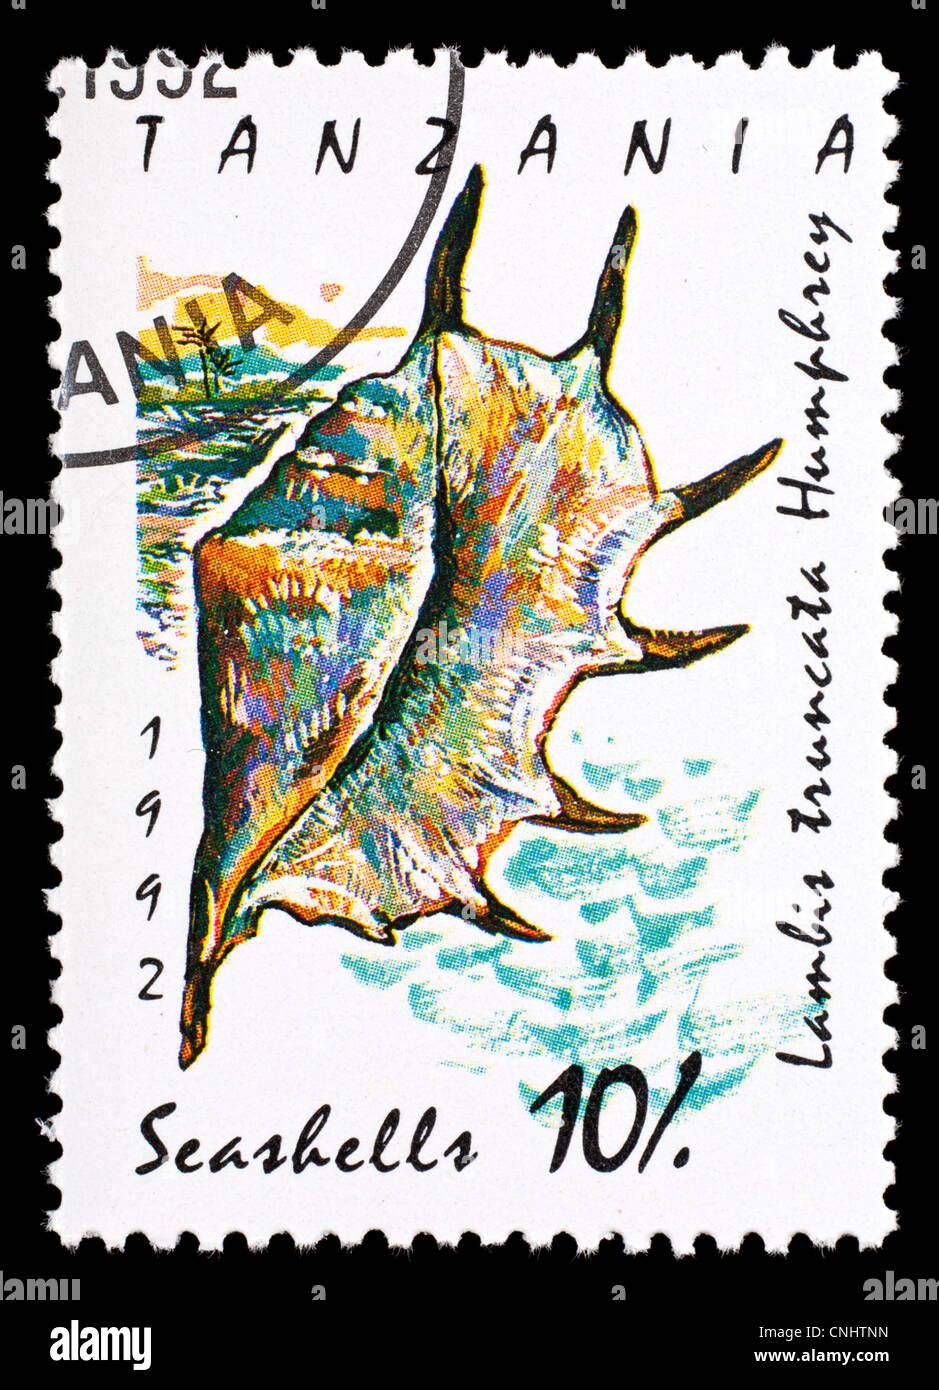 Postage stamp from Tanzania depicting a seashell (Lambis truncata Humphrey) Stock Photo